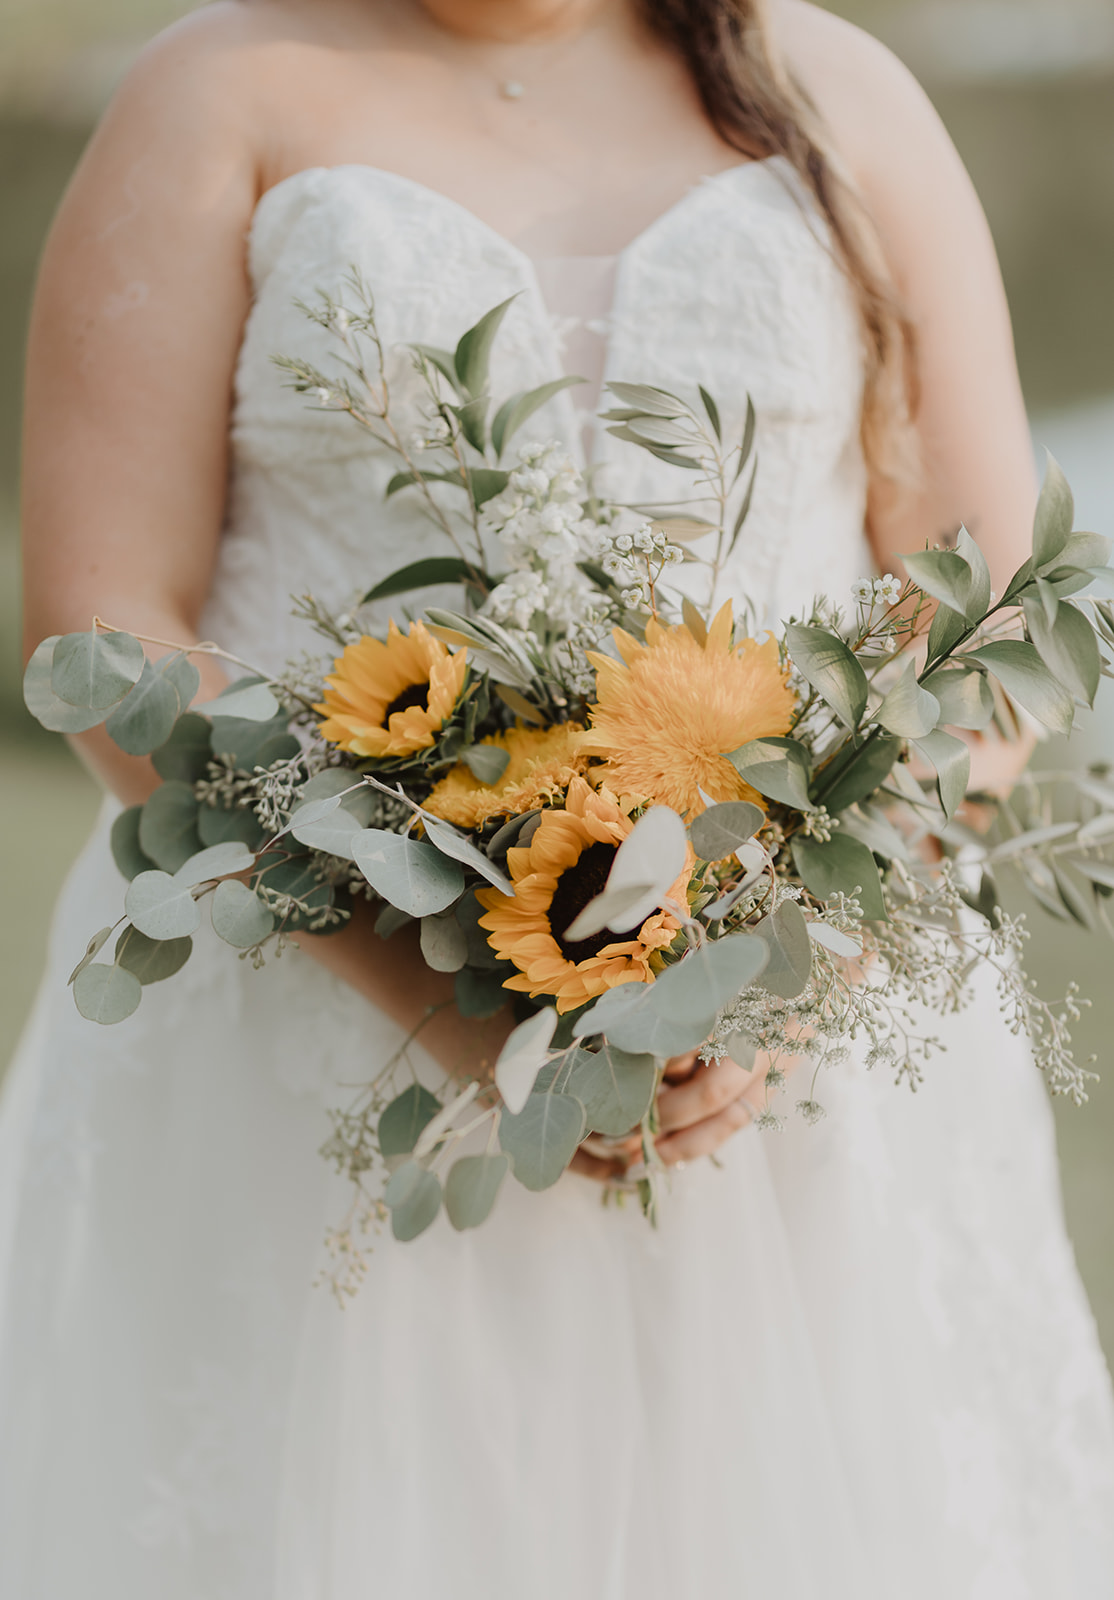 Choosing Timeless Colors for Your Vintage Wedding |Ellyse Jensen Photography | Spring Lake Events | Rockmart, GA